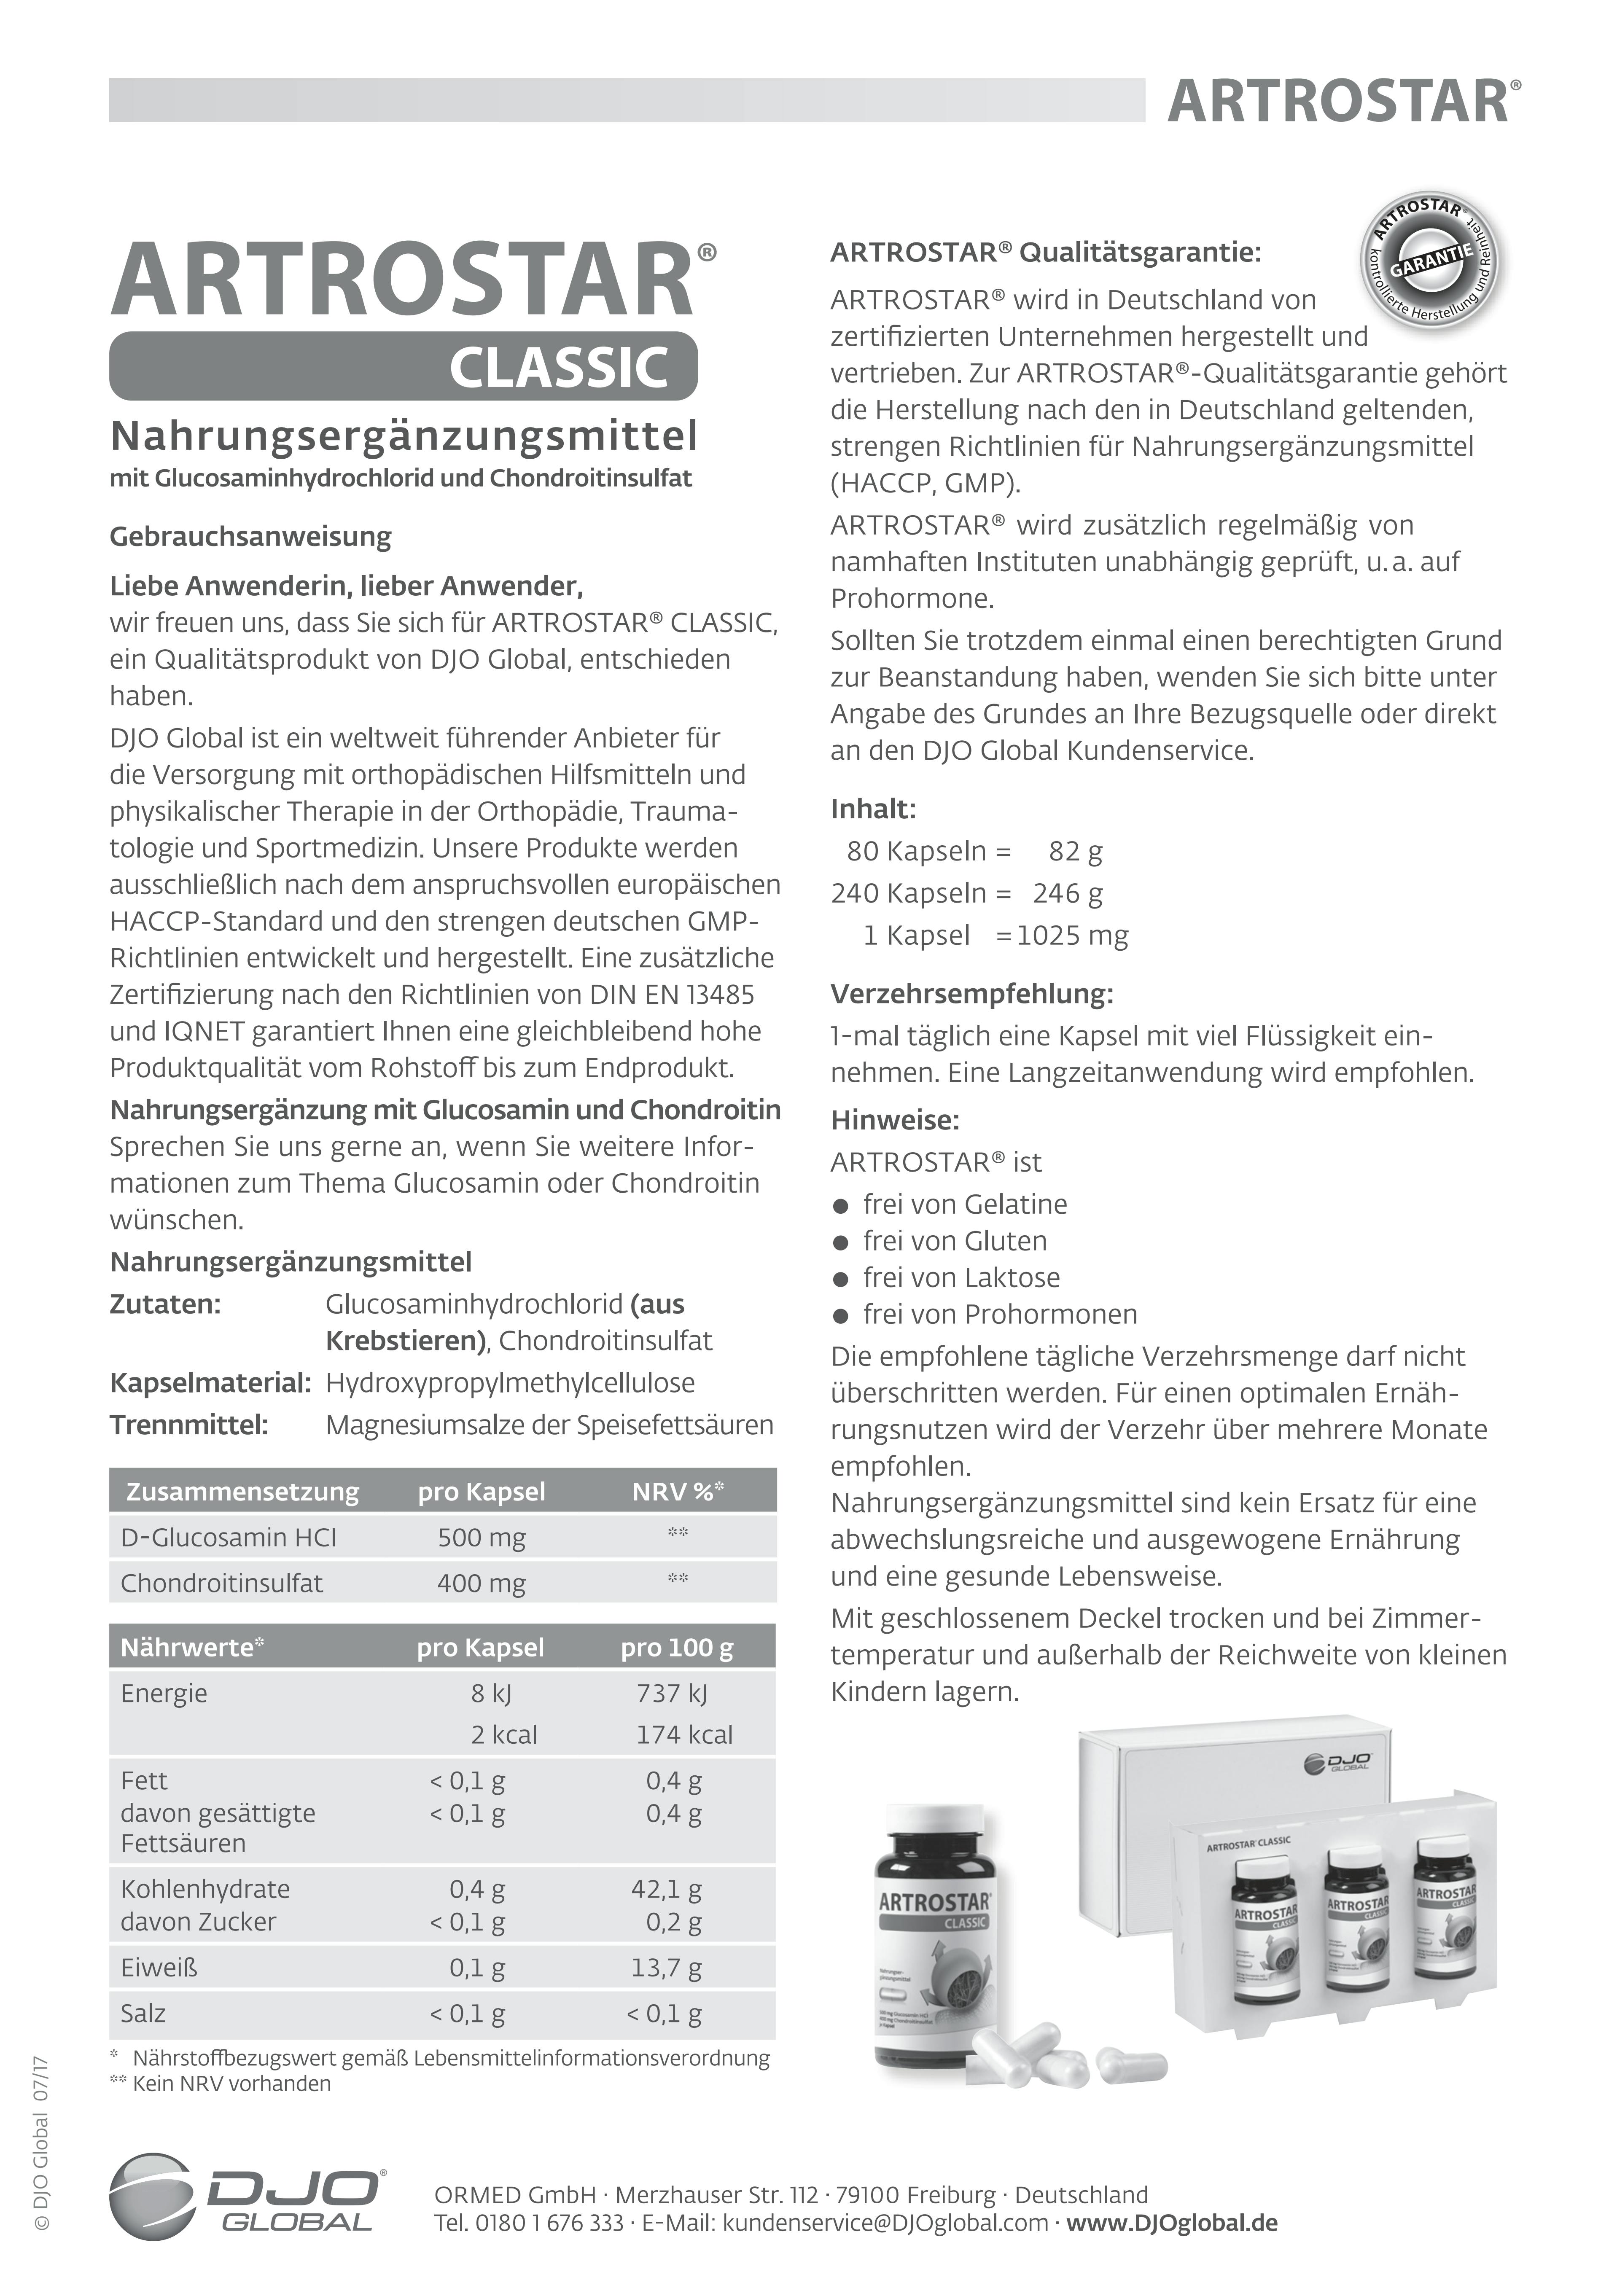 Gebrauchsanleitung_ARTROSTAR_Classic_07-17.pdf